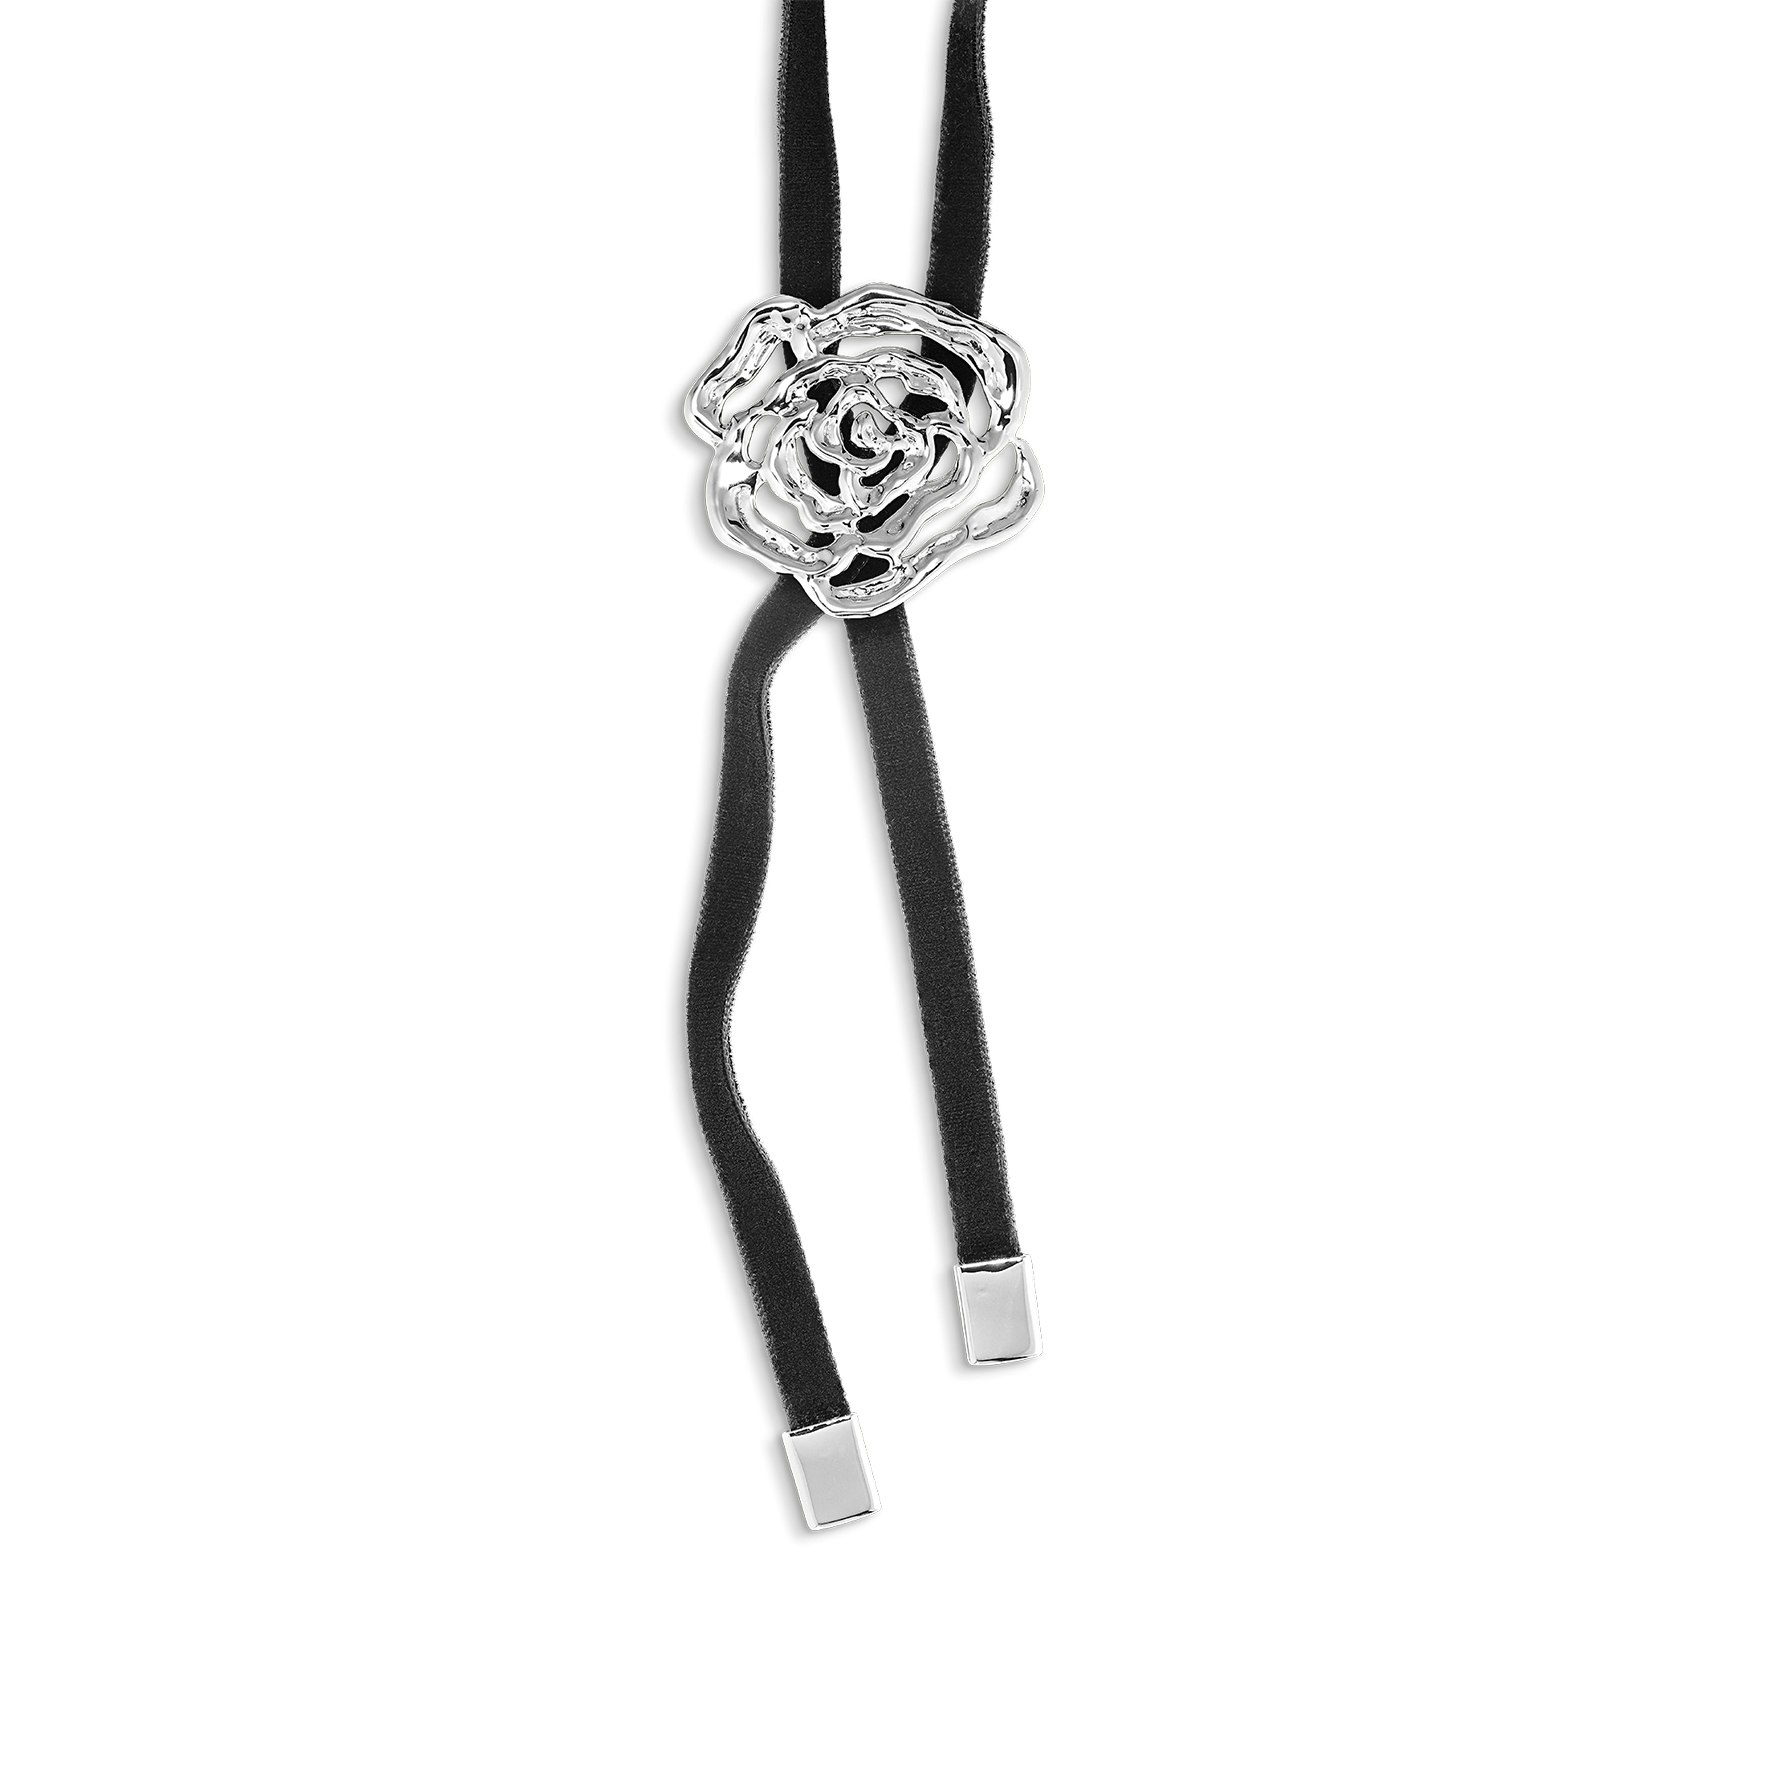 Rosle Bolo Tie Necklace från Jane Kønig i Förgyllt-Silver Sterling 925